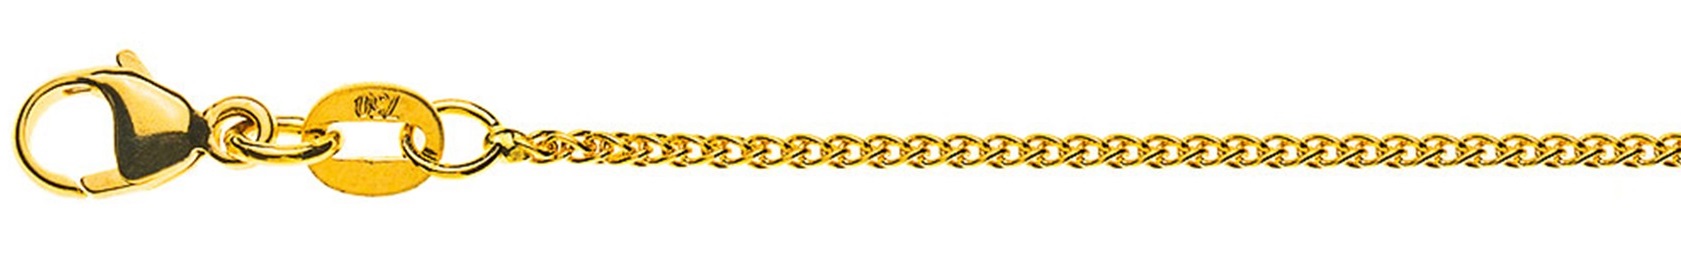 AURONOS Prestige Necklace yellow gold 18K cable chain 42cm 1.2mm